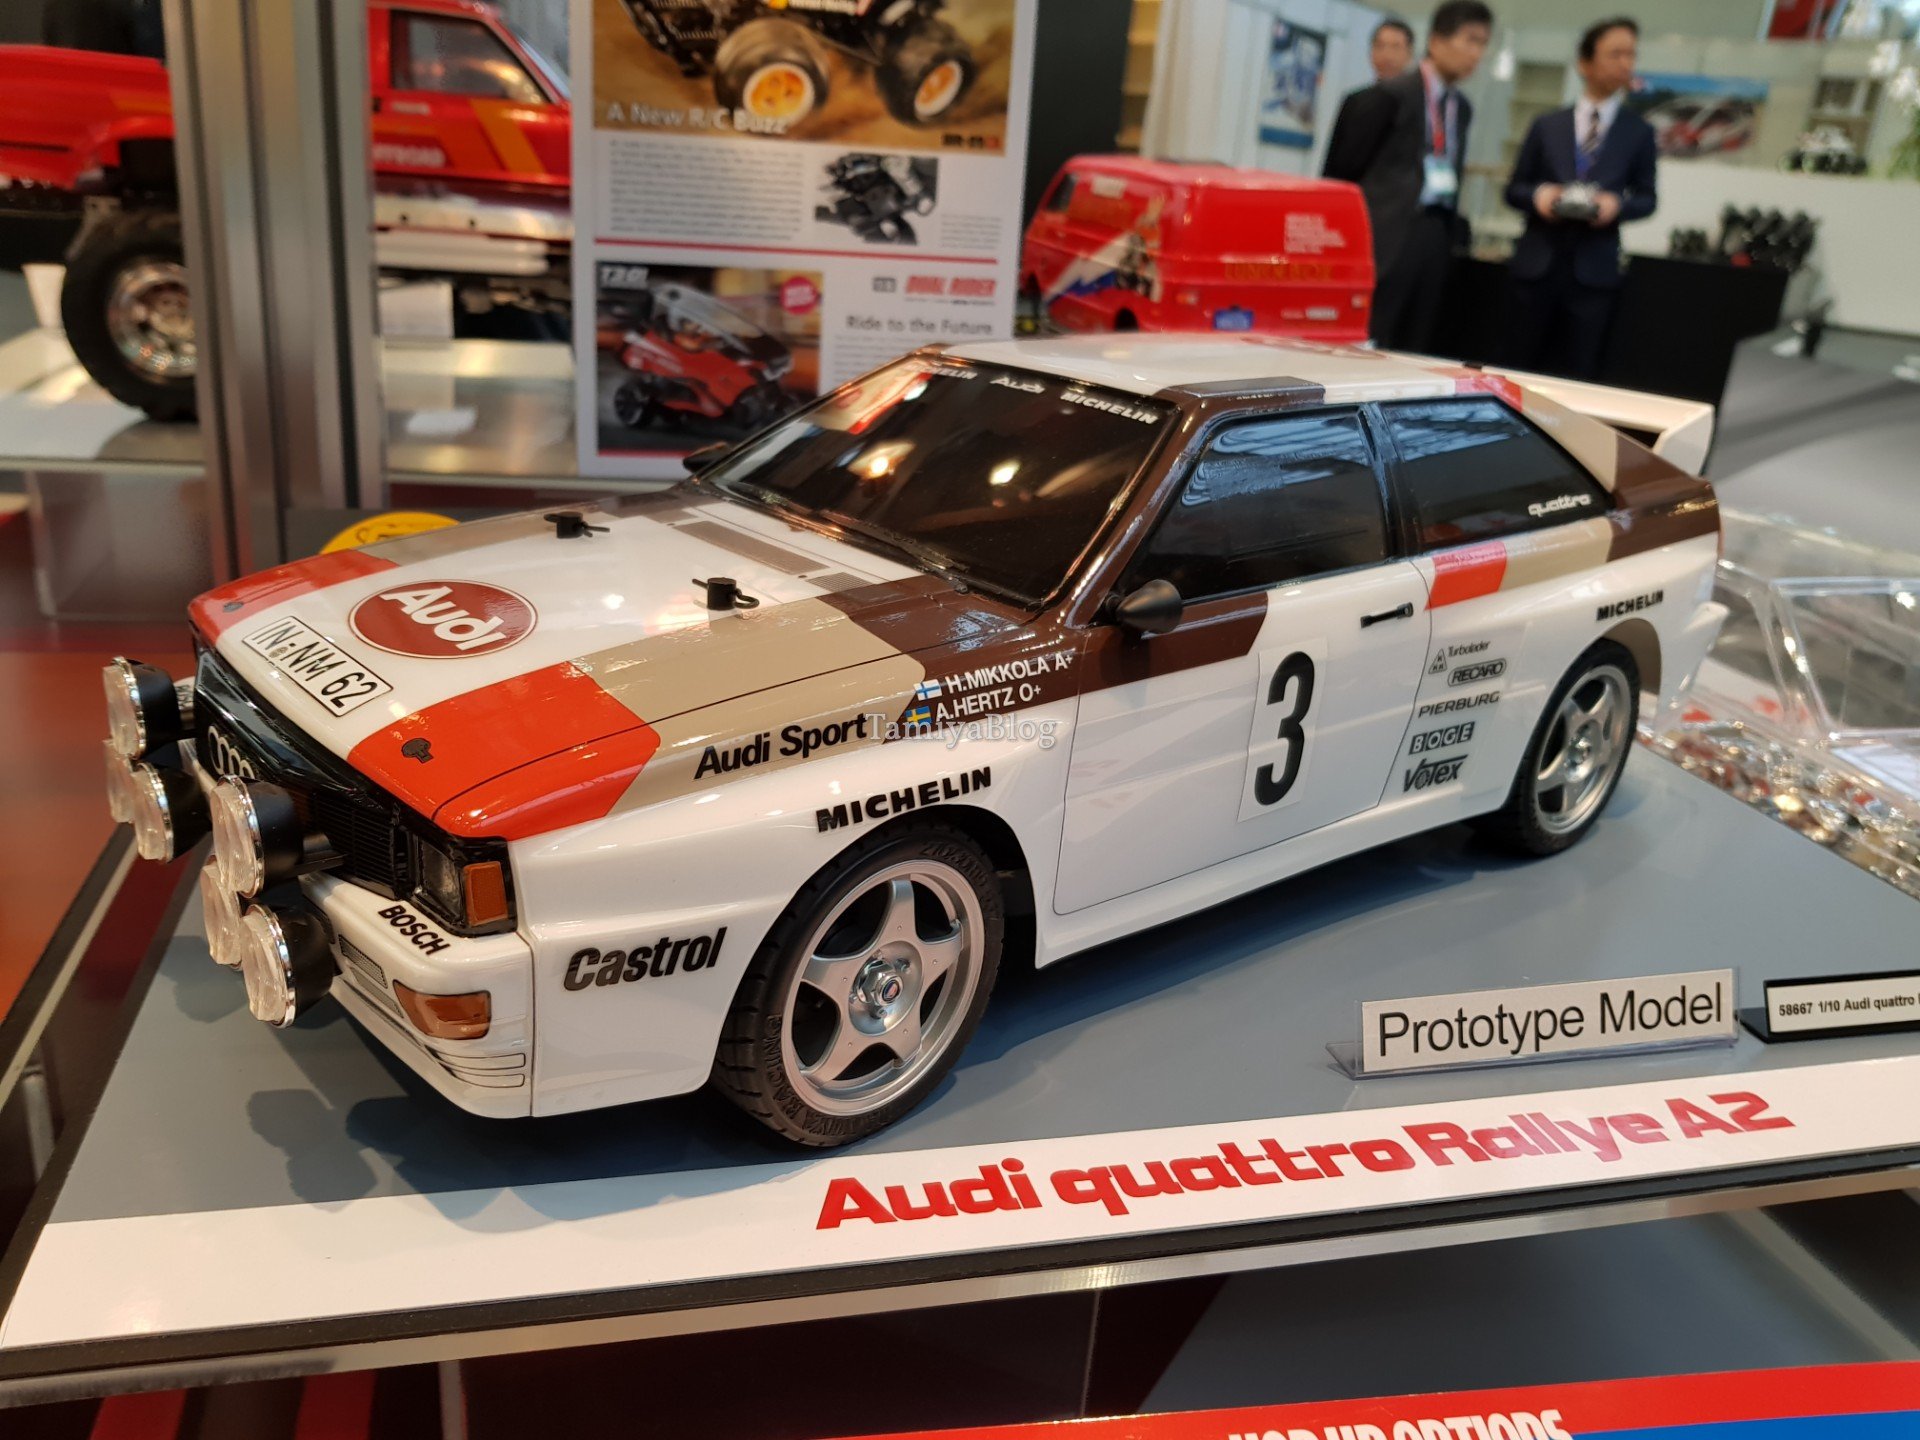 Horen van Adviseur informeel Tamiya 58667 Audi Quattro Rallye A2 TT-02 @ Nuremberg Toy Fair 2019 -  TamiyaBlog